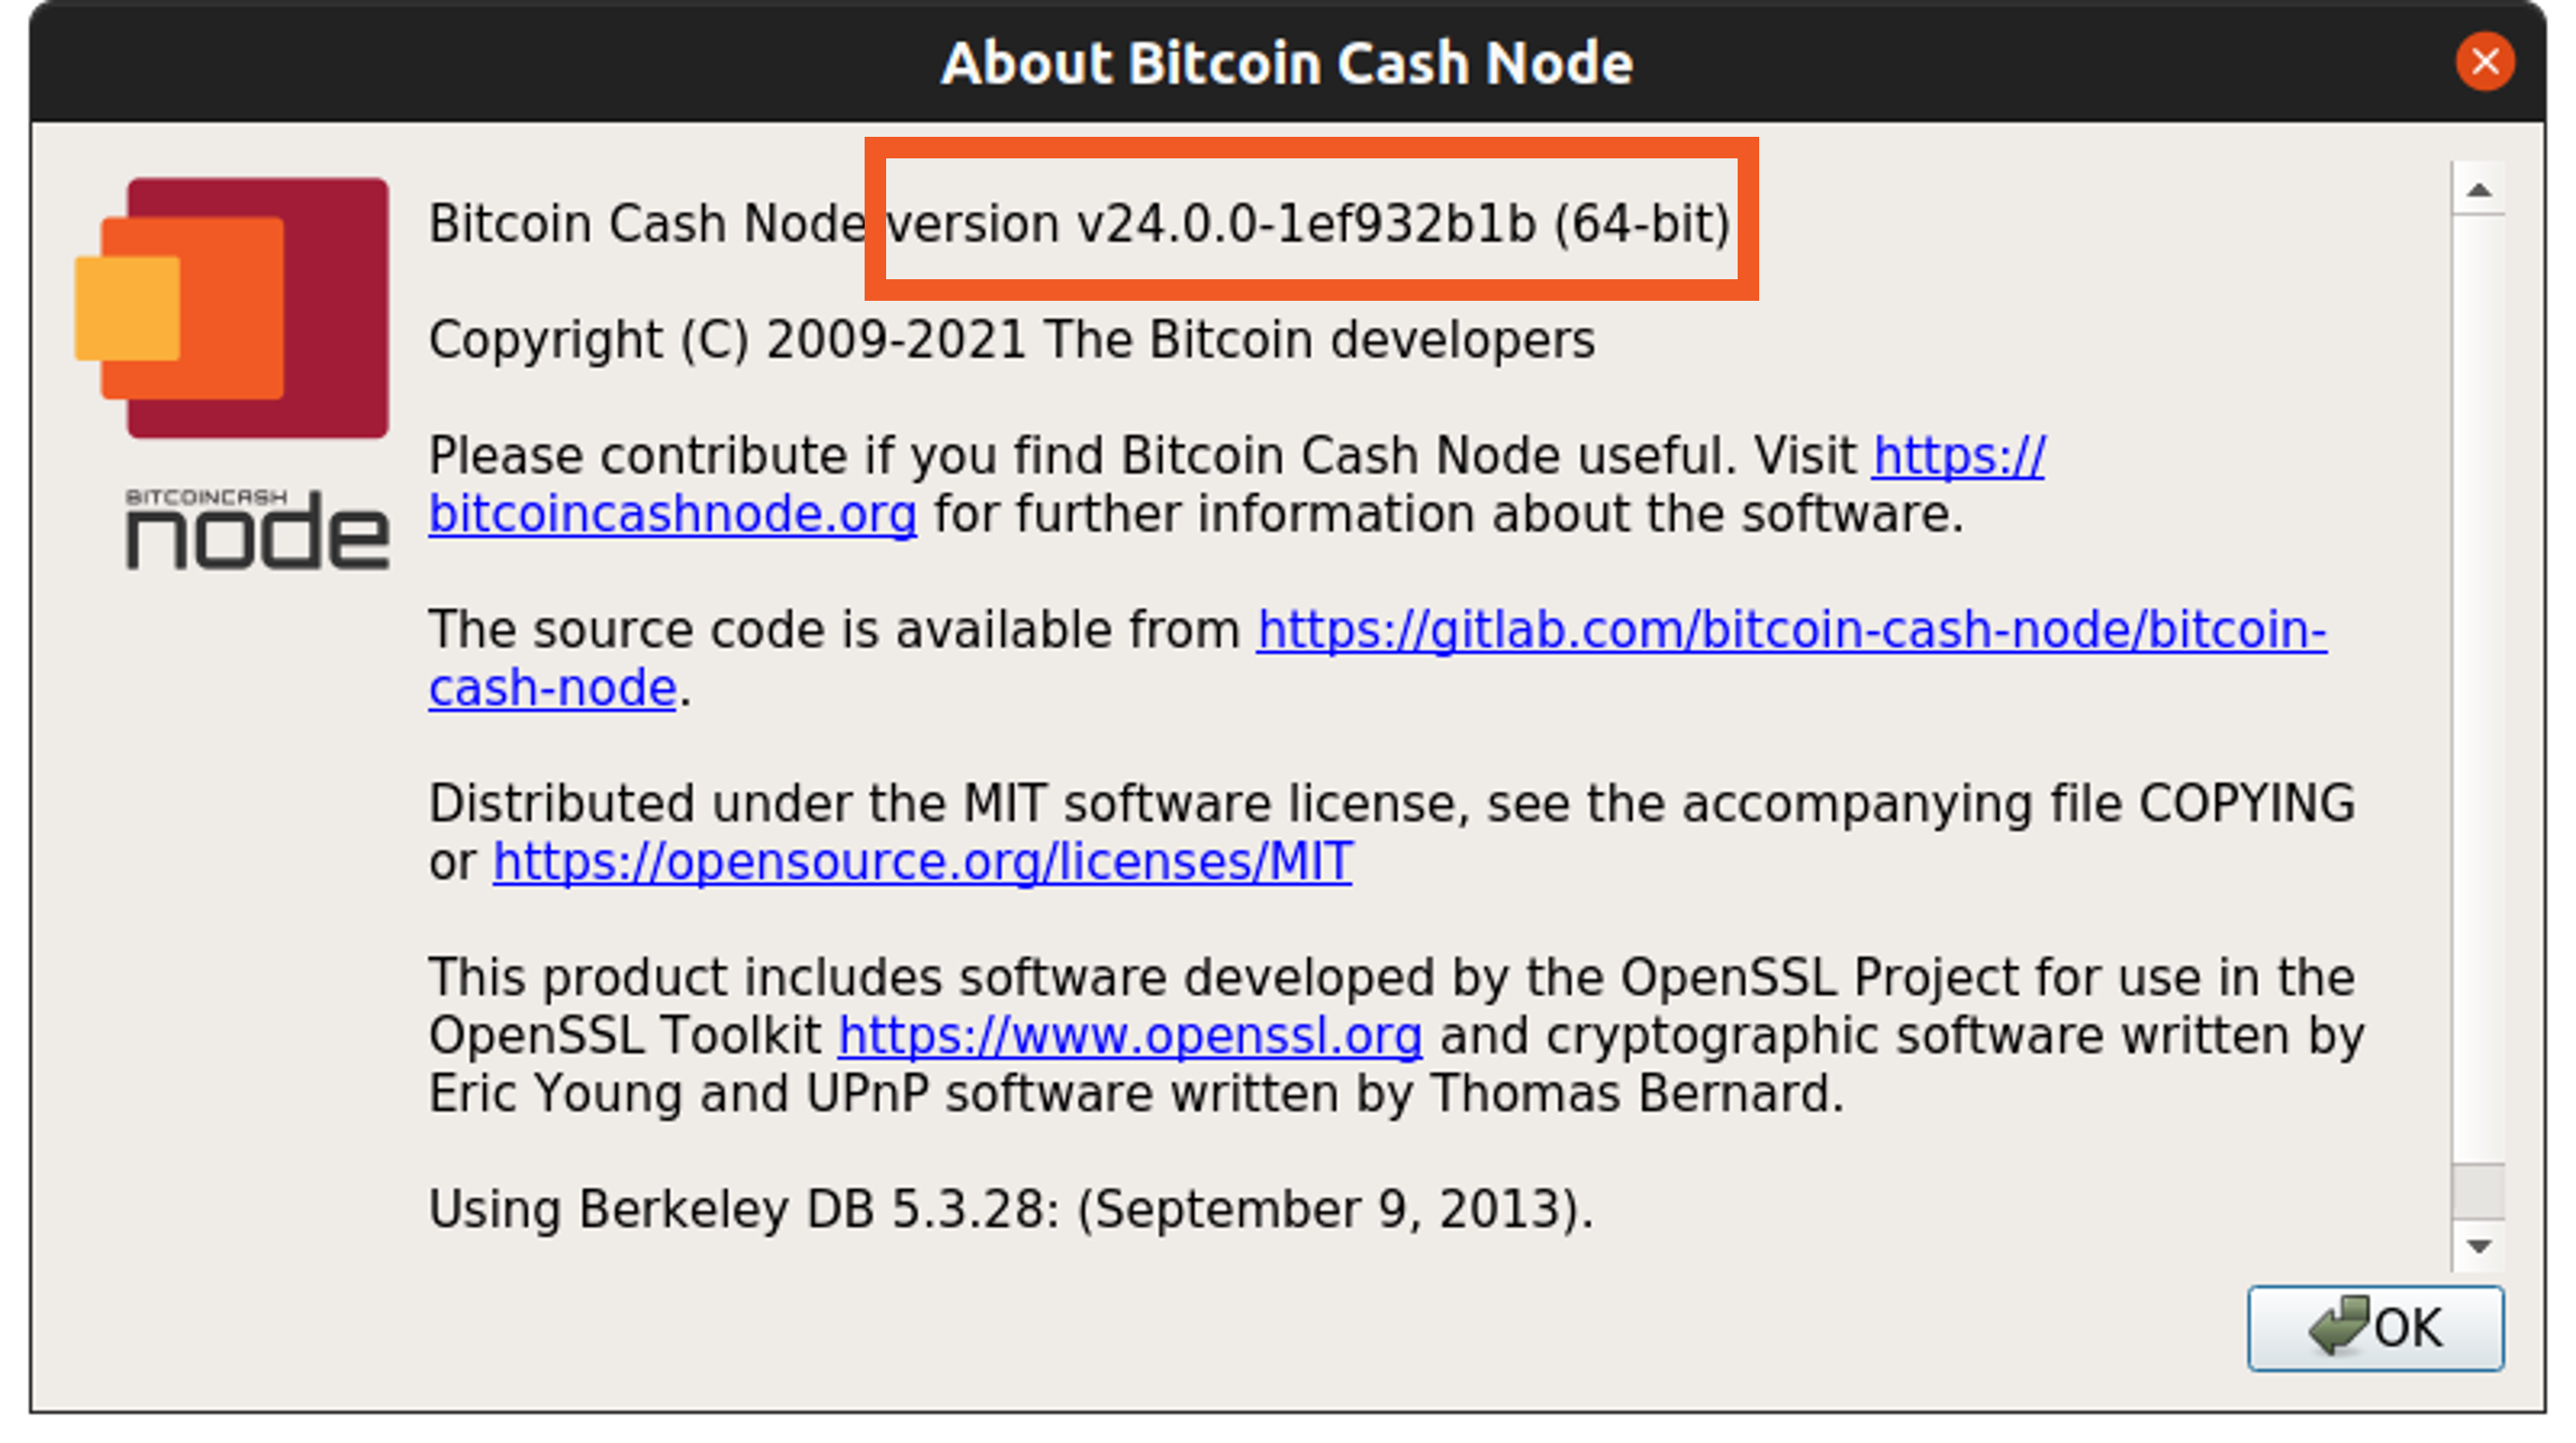 About Bitcoin Cash Node